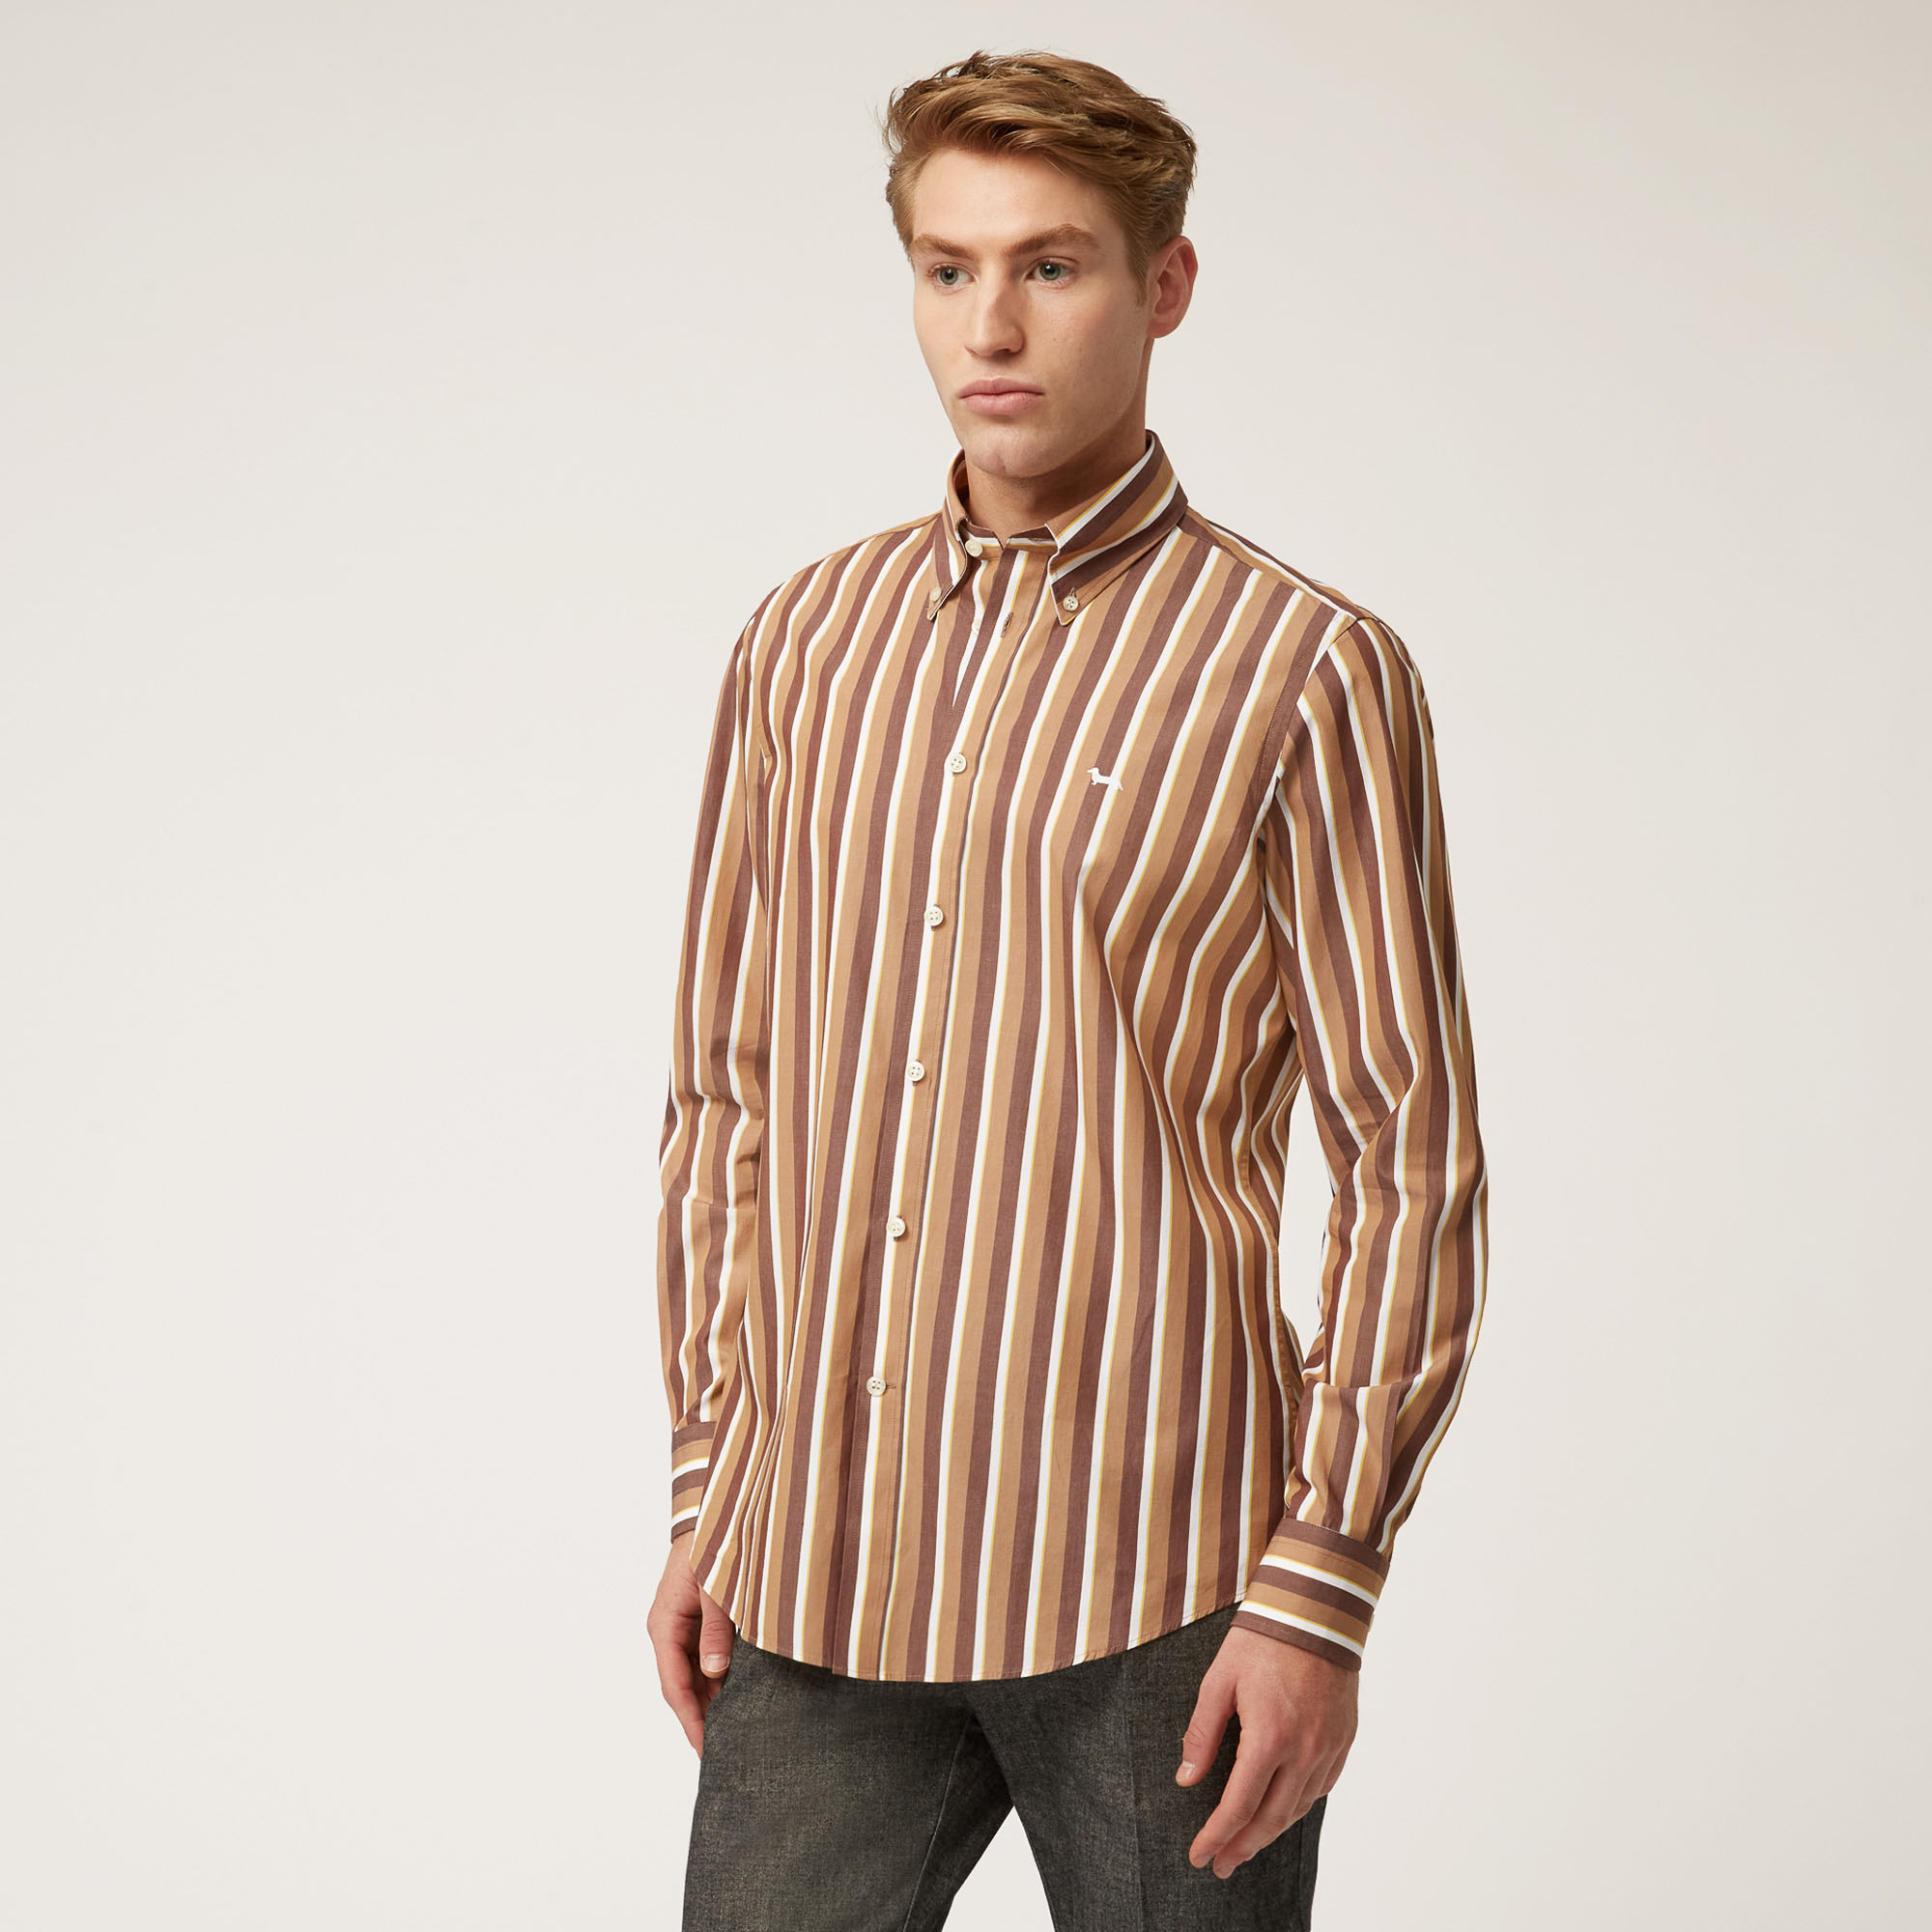 Tone-On-Tone Striped Organic Cotton Shirt, Beige, large